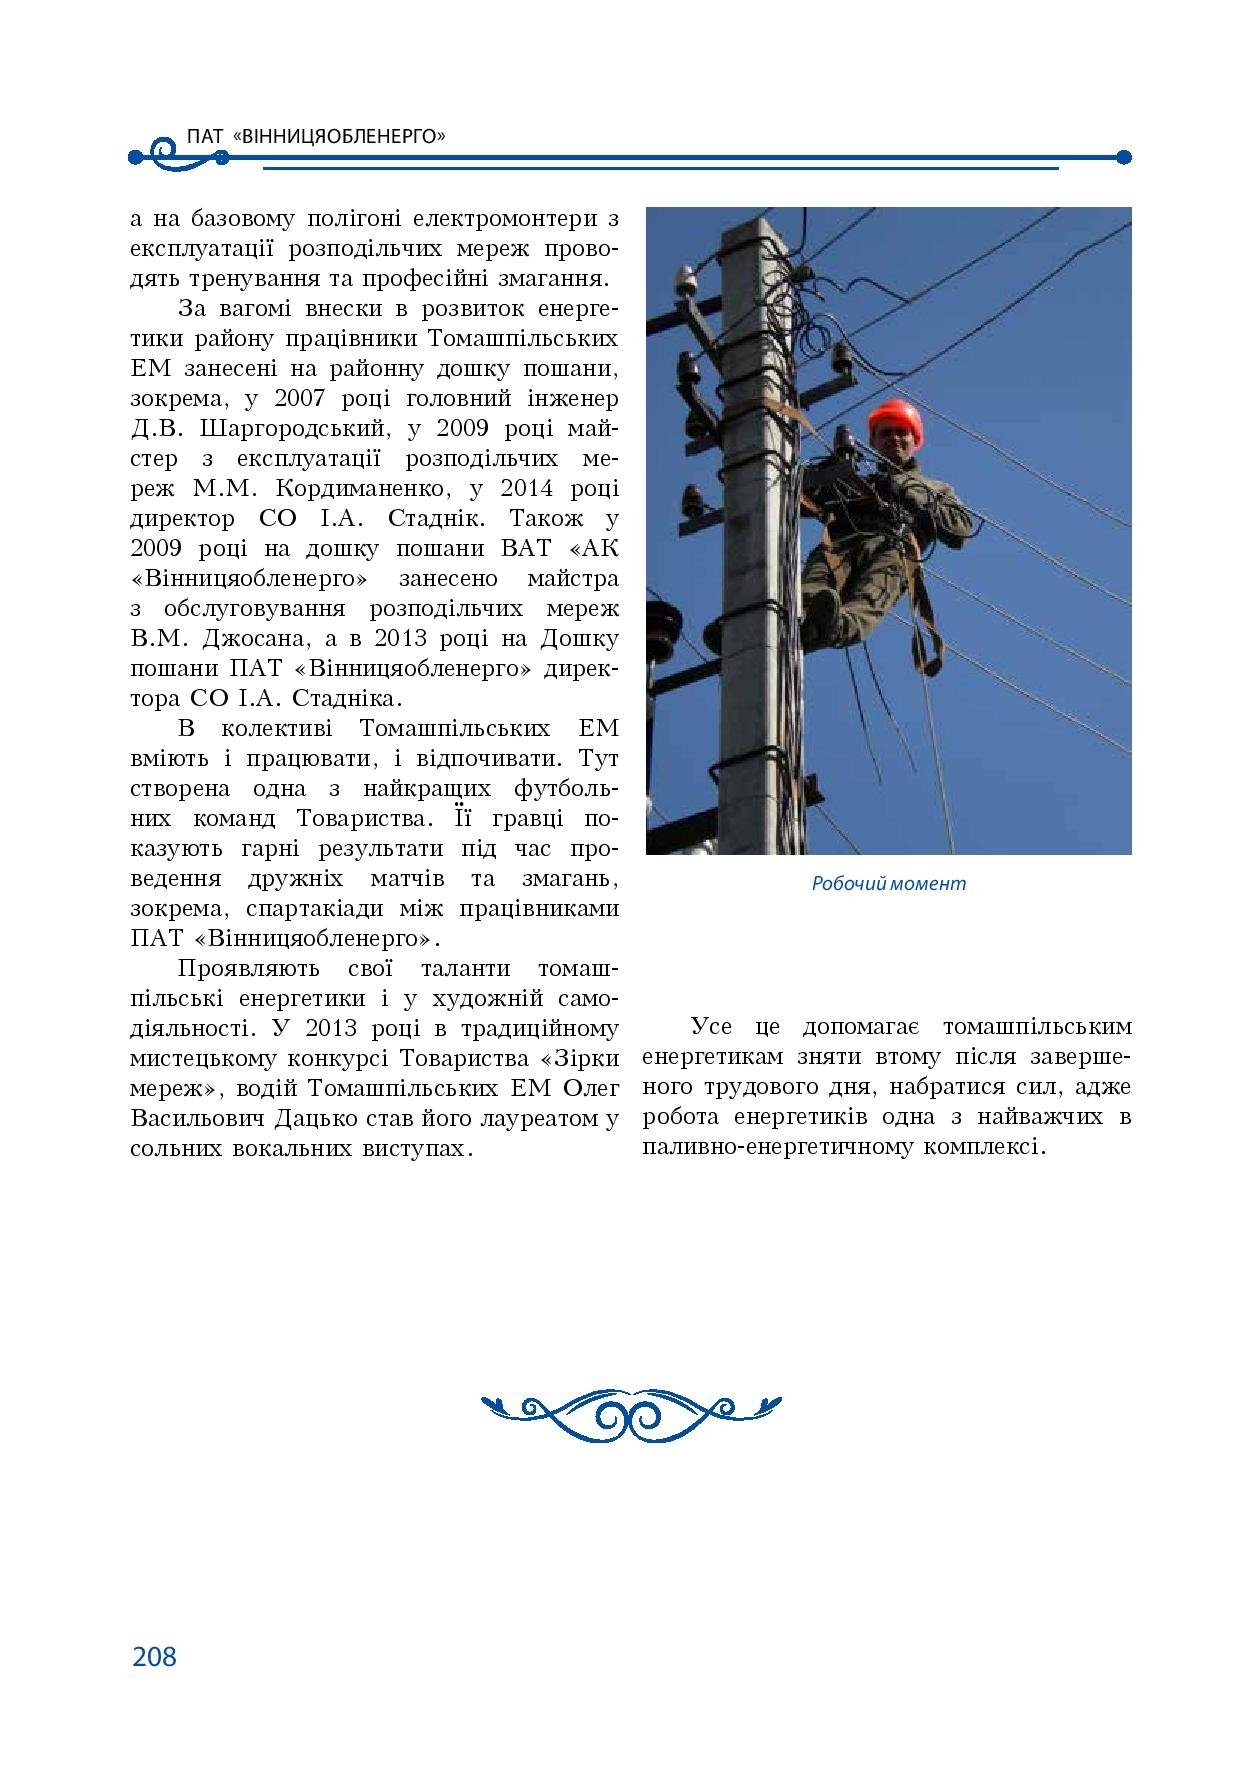 АТ «Вінницяобленерго» – personal account, transmit meter readings, call center 0 (800) 217-217 Our publications_207